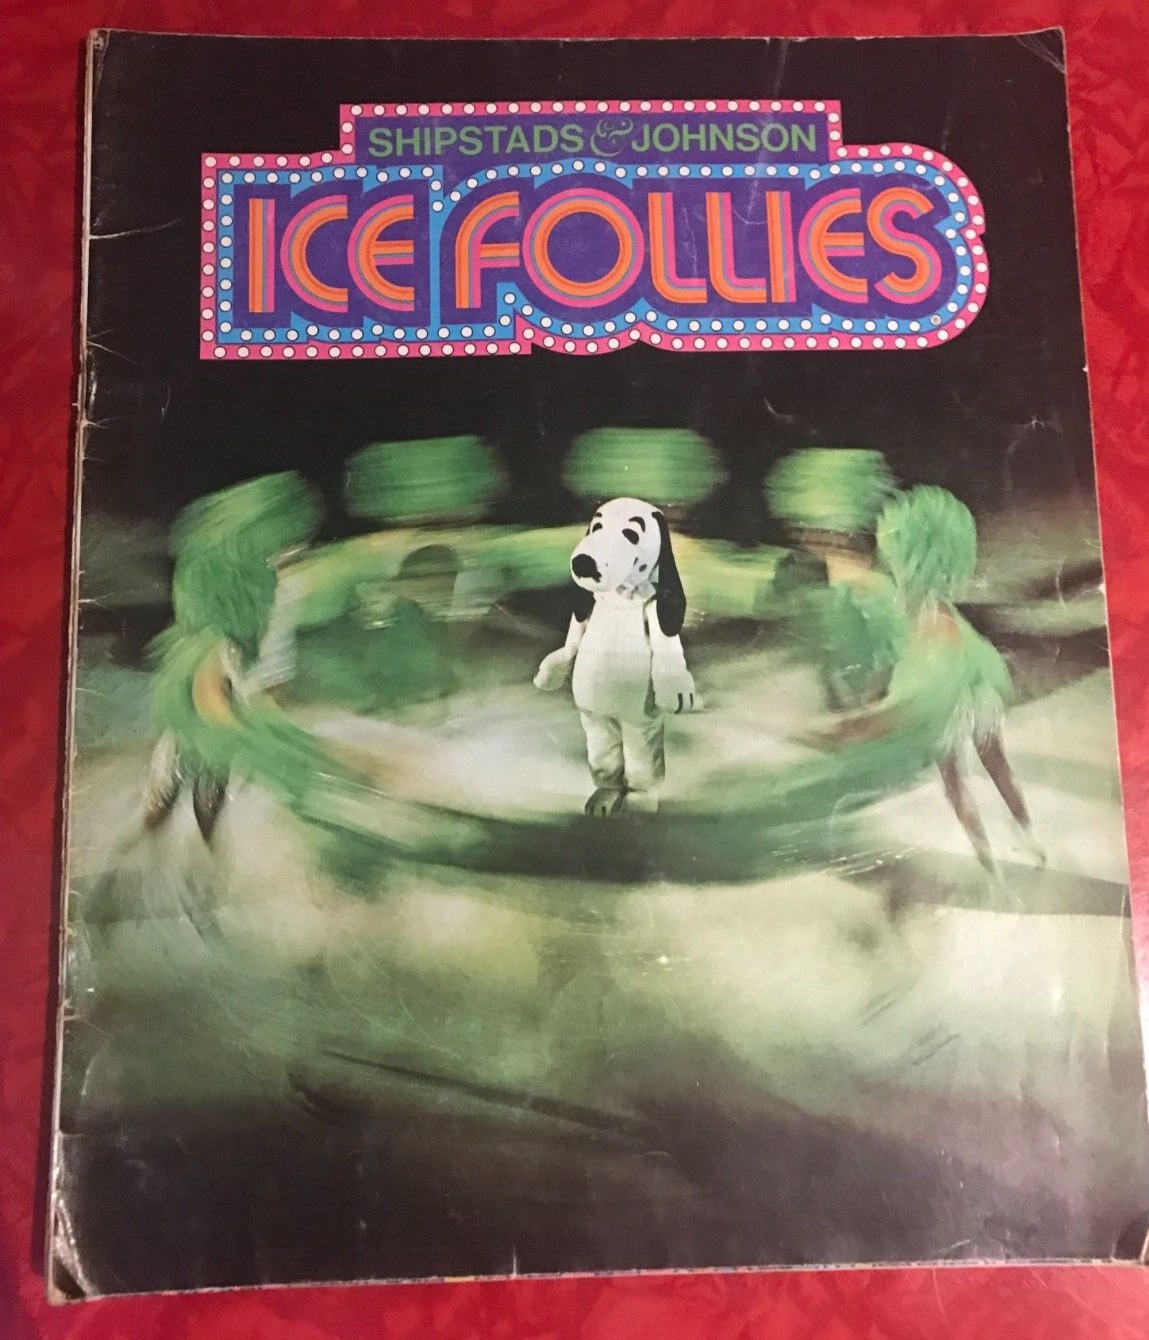 1971 SHIPSTADS  & JOHNSON ICE FOLLIES featuring SNOOPY PROGRAM